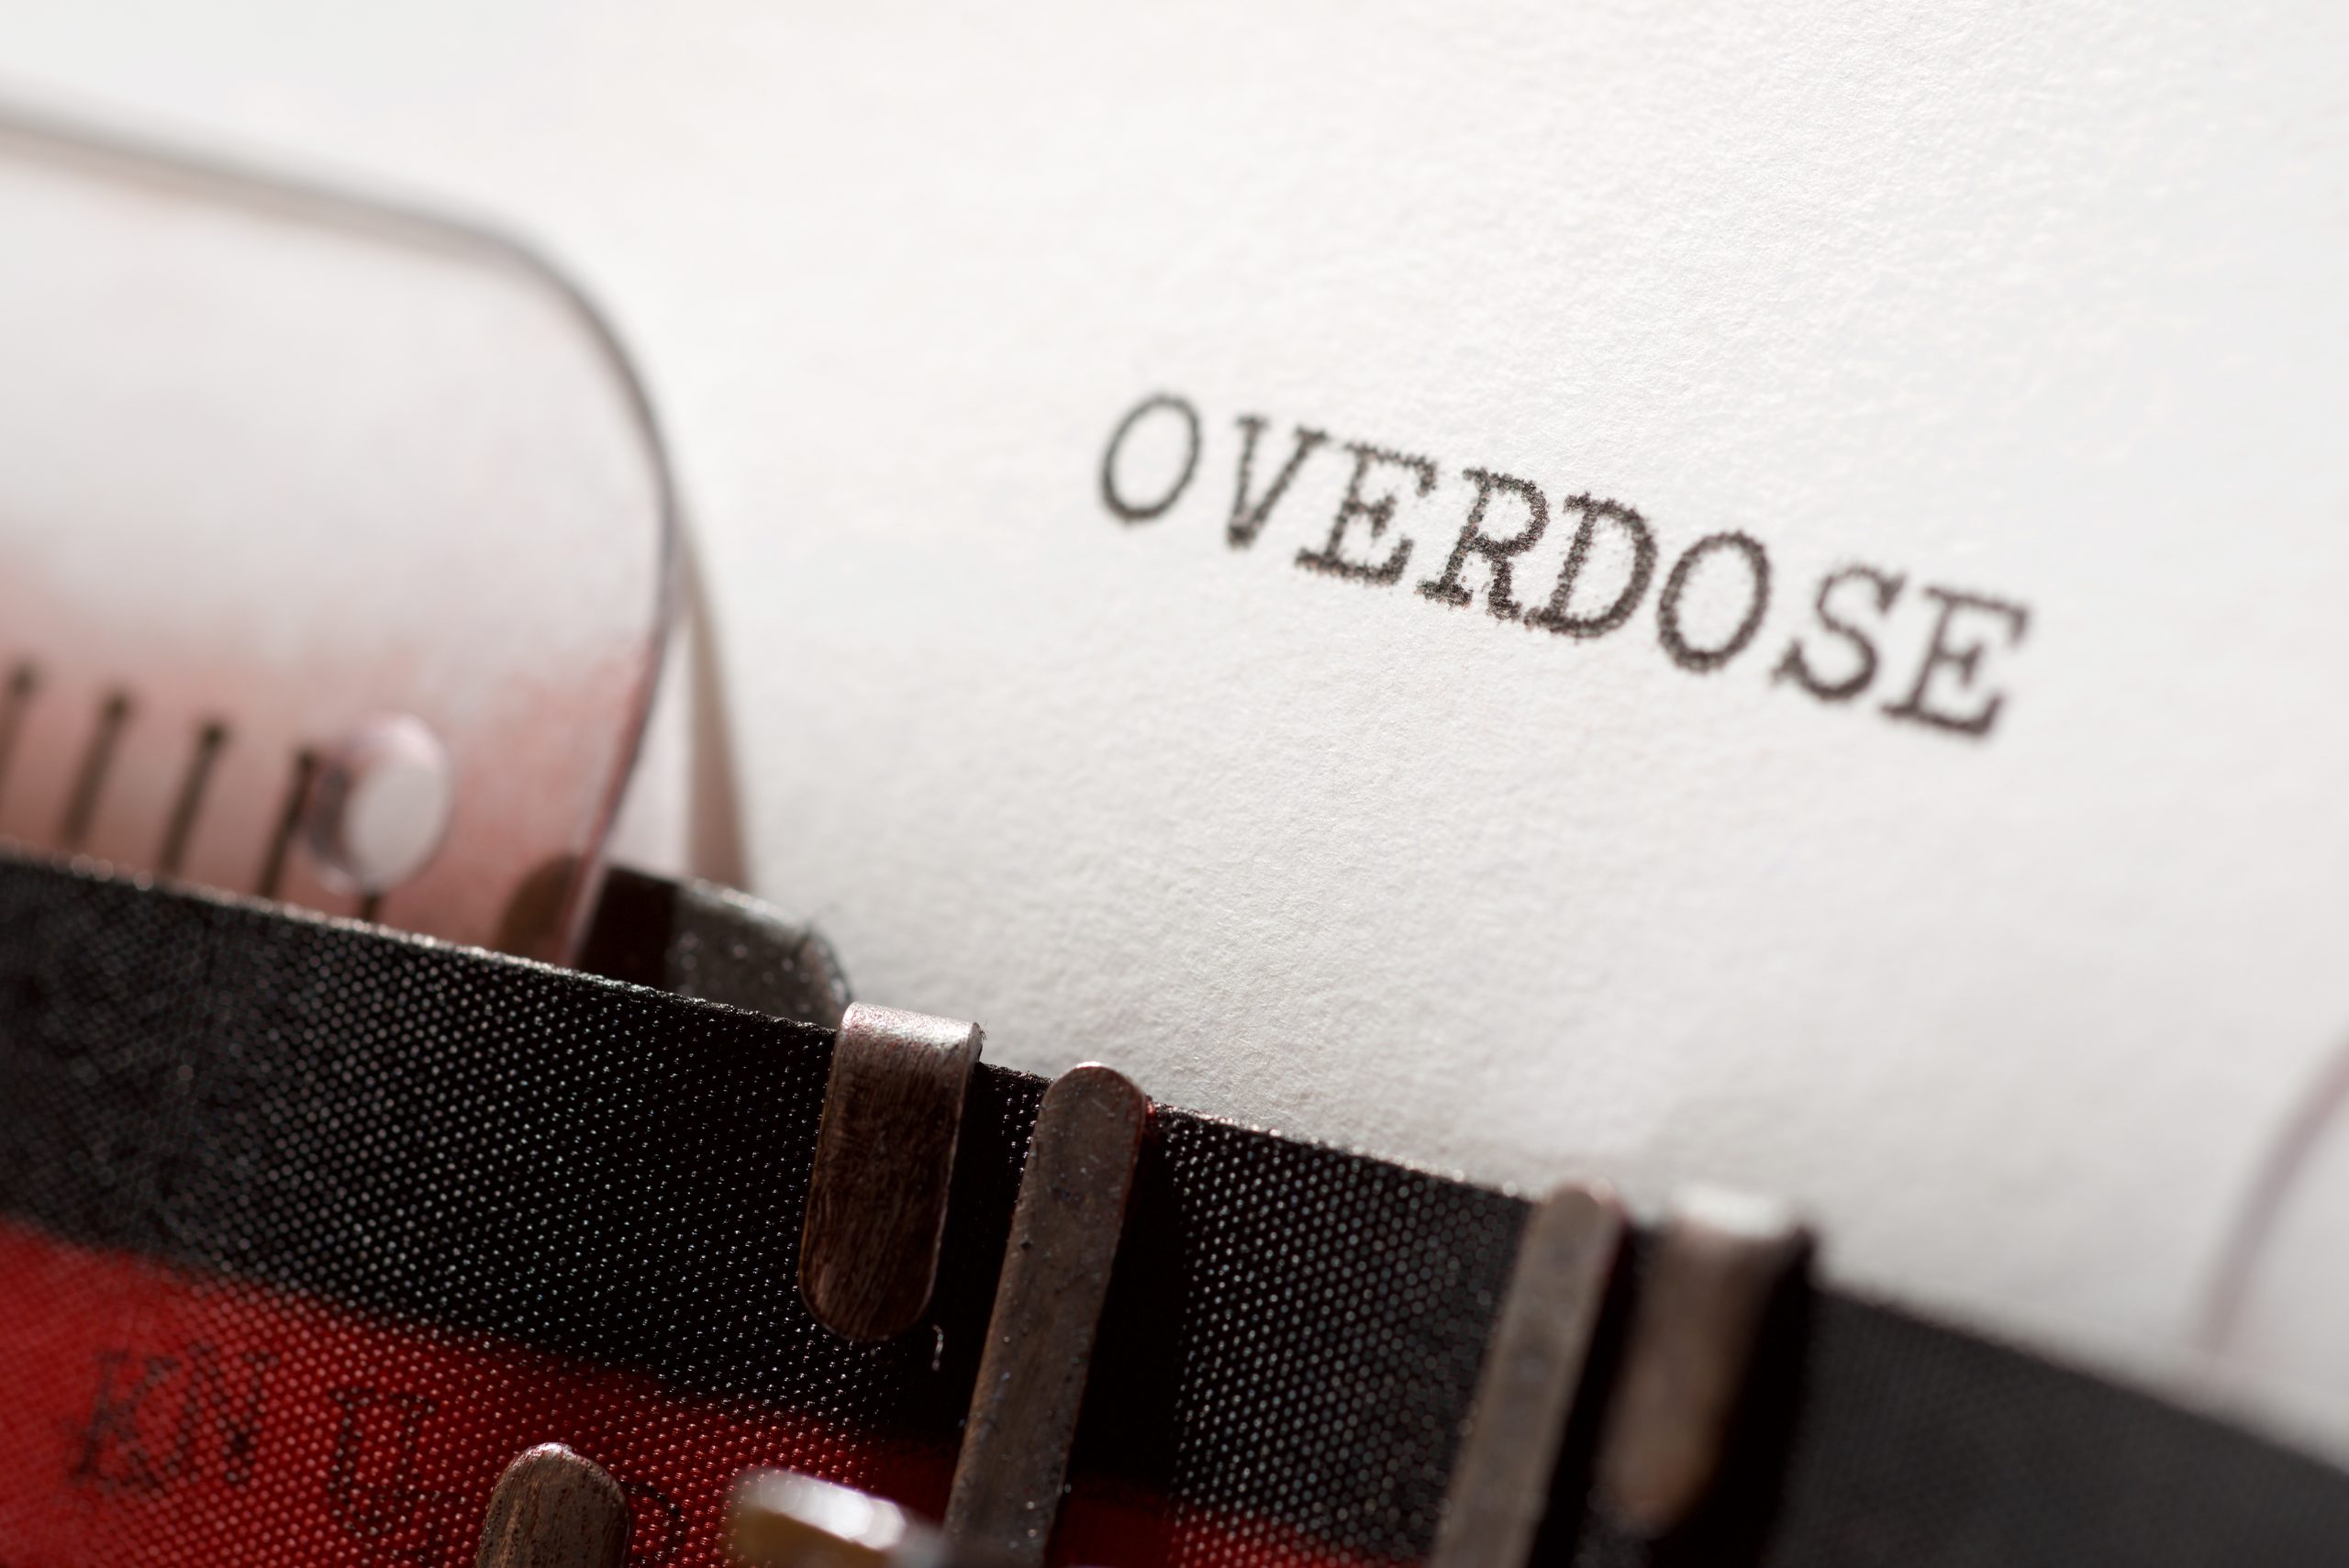 Overdose,Word,Written,With,A,Typewriter.